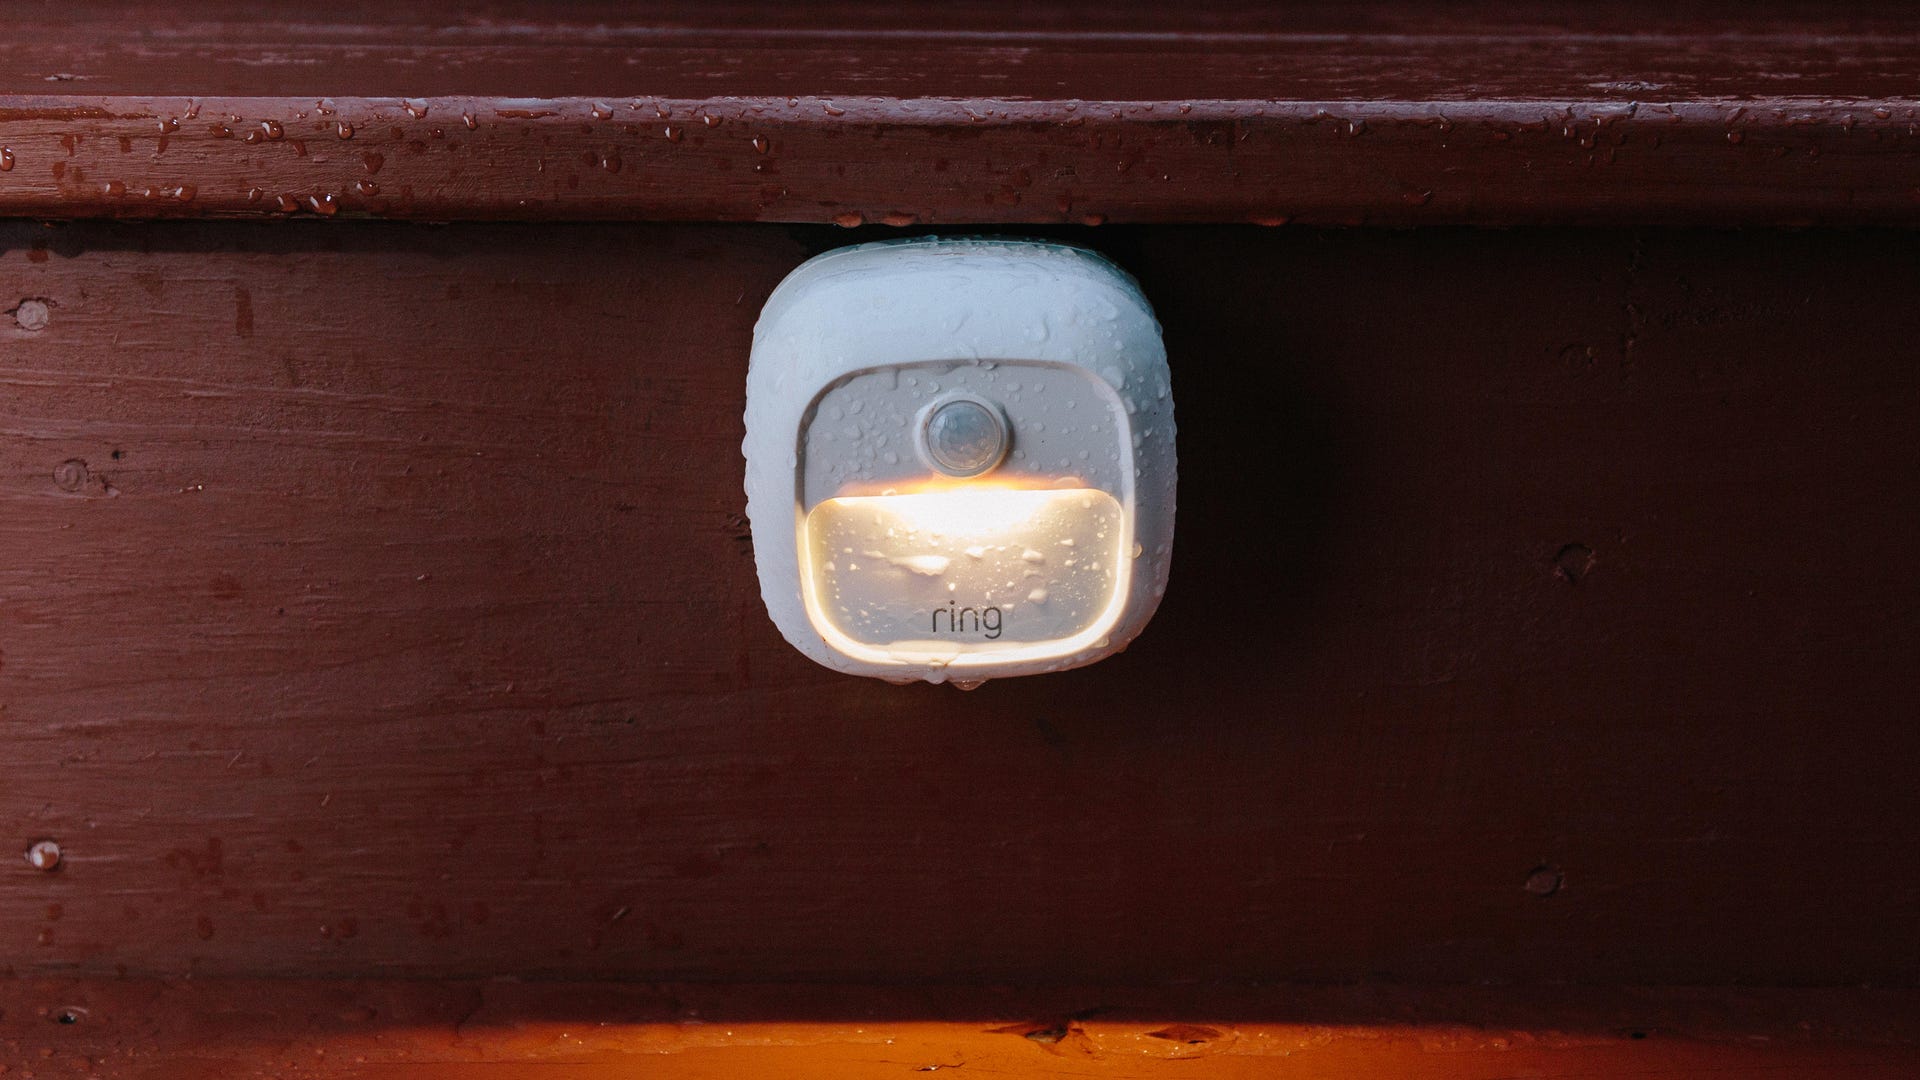 ring-outdoor-lights-product-photos-2-smart-lighting-steplight